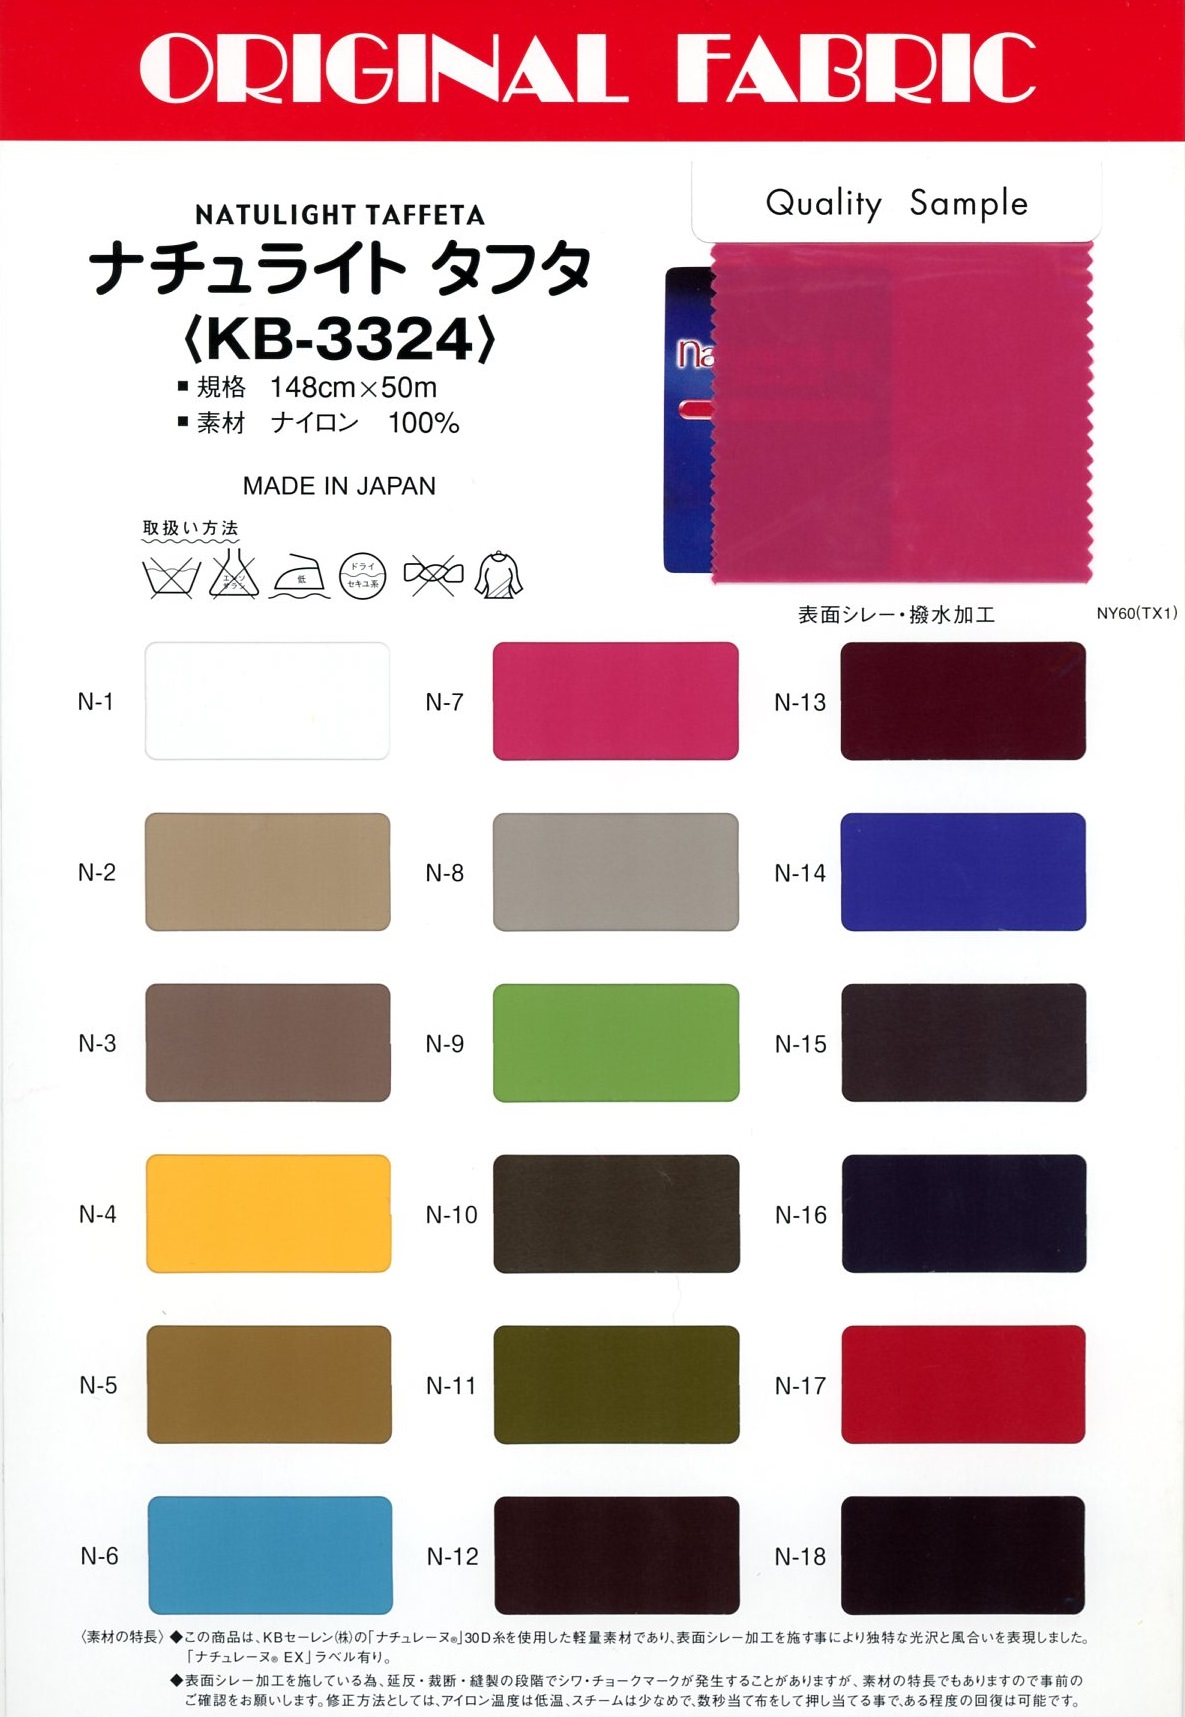 KB-3324 Naturite Taffeta[Têxtil / Tecido] Masuda